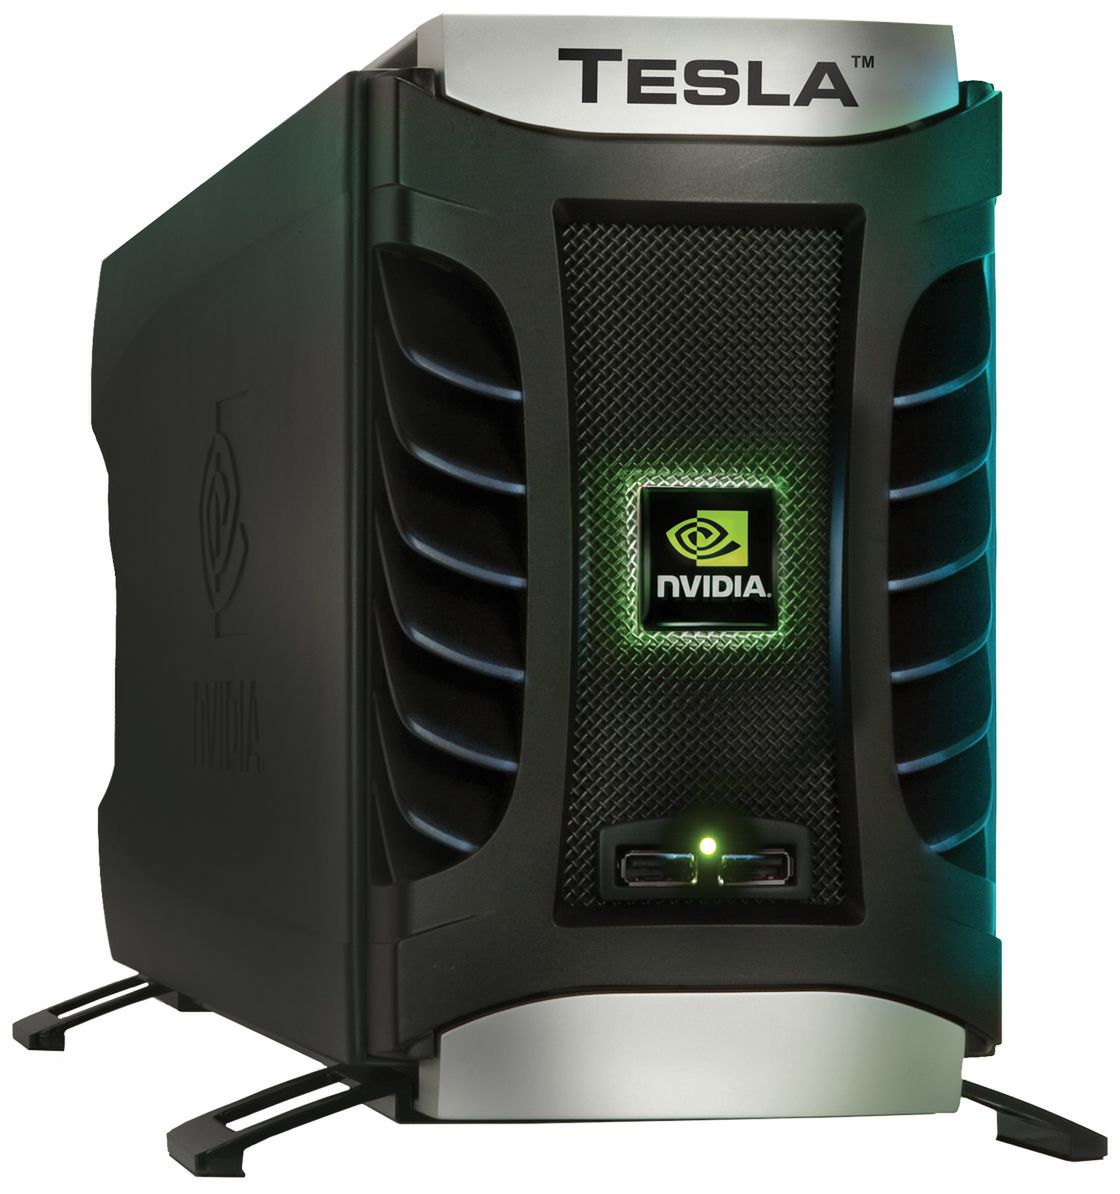 Nvidia Tesla napędza najszybsze komputery świata (pcinpact.com)